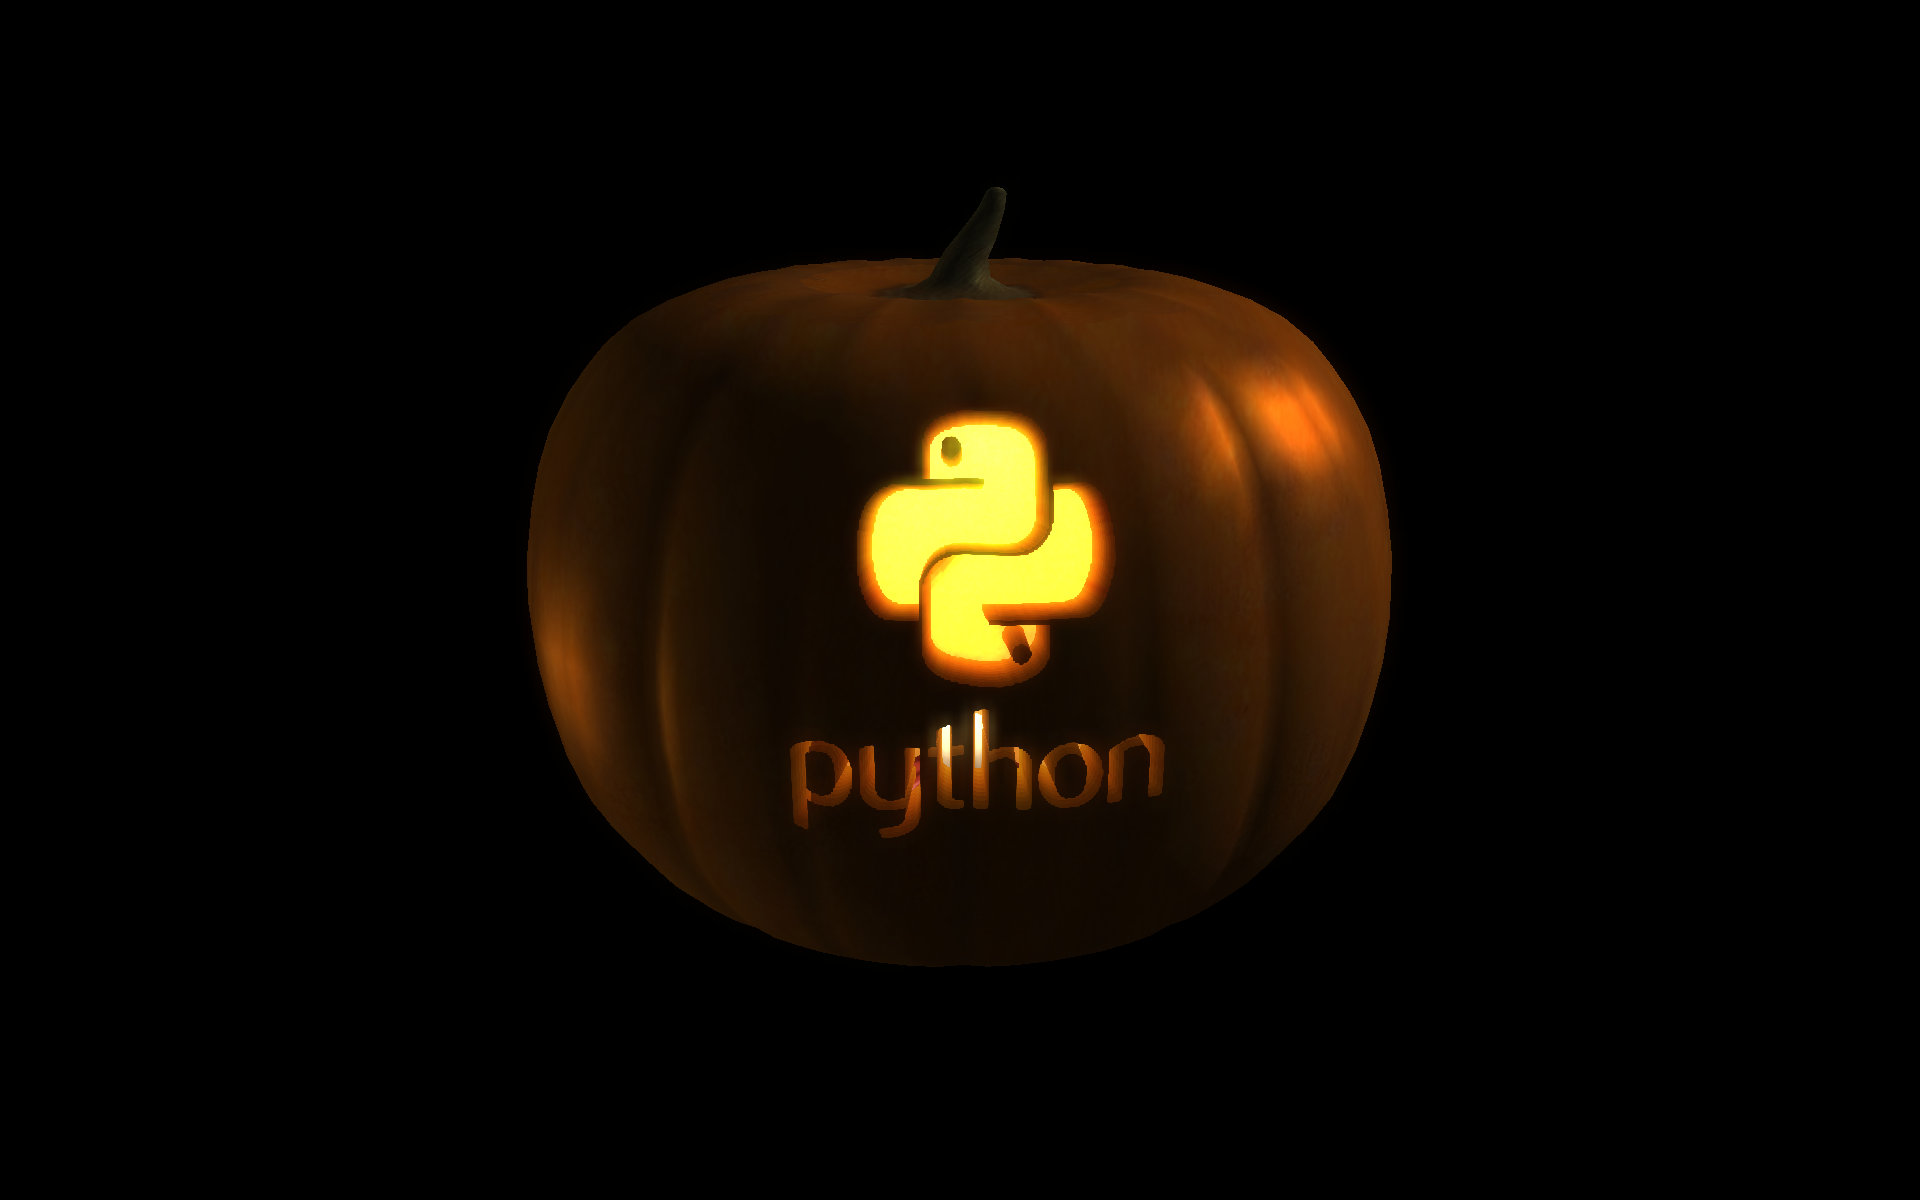 Python Programming Wallpaper Python [carving] [desktop]